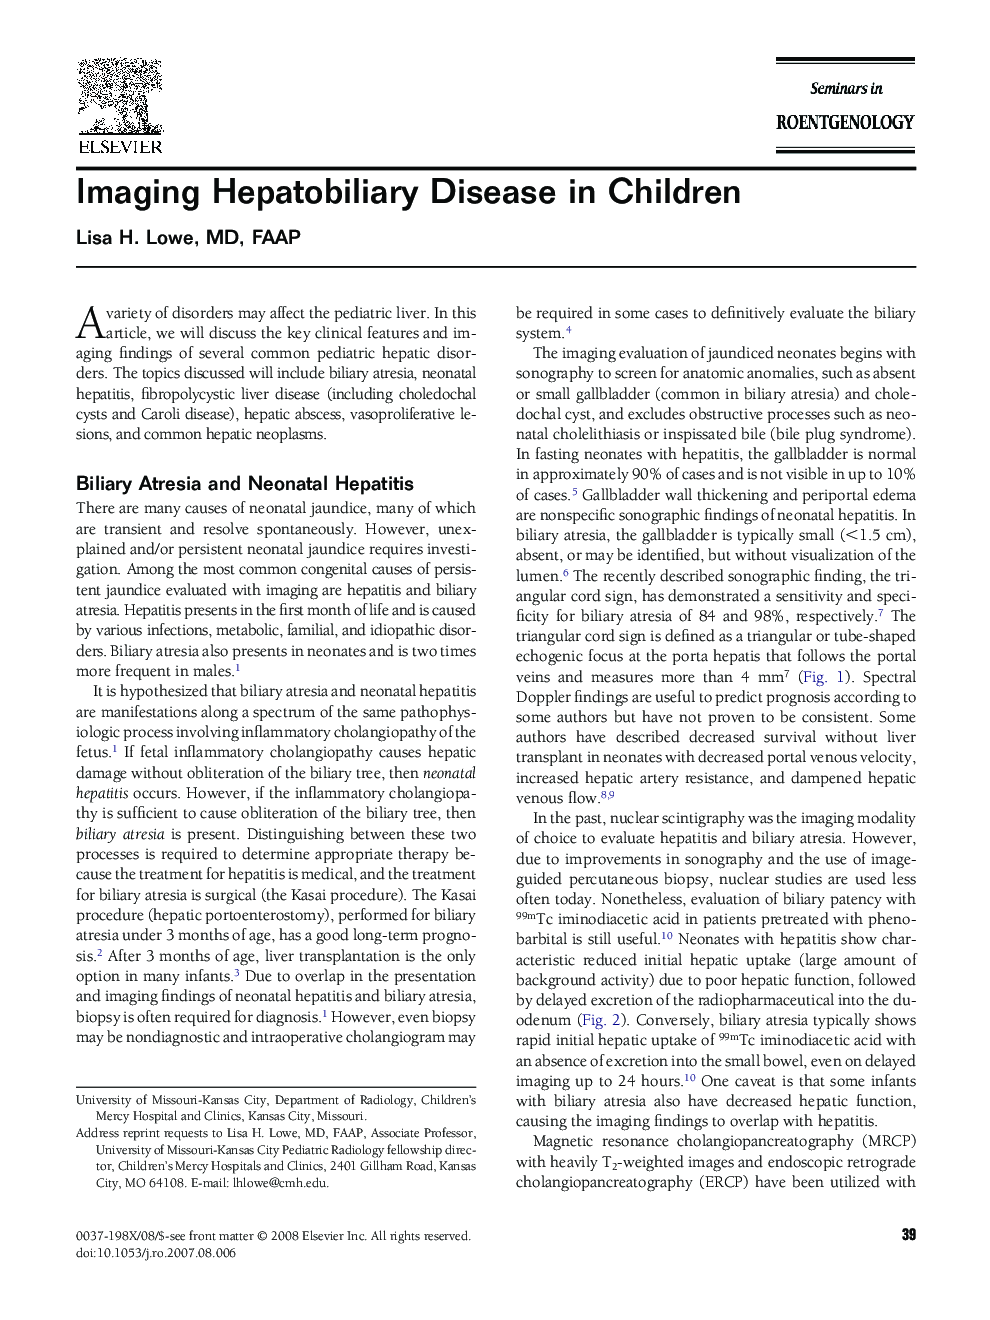 Imaging Hepatobiliary Disease in Children